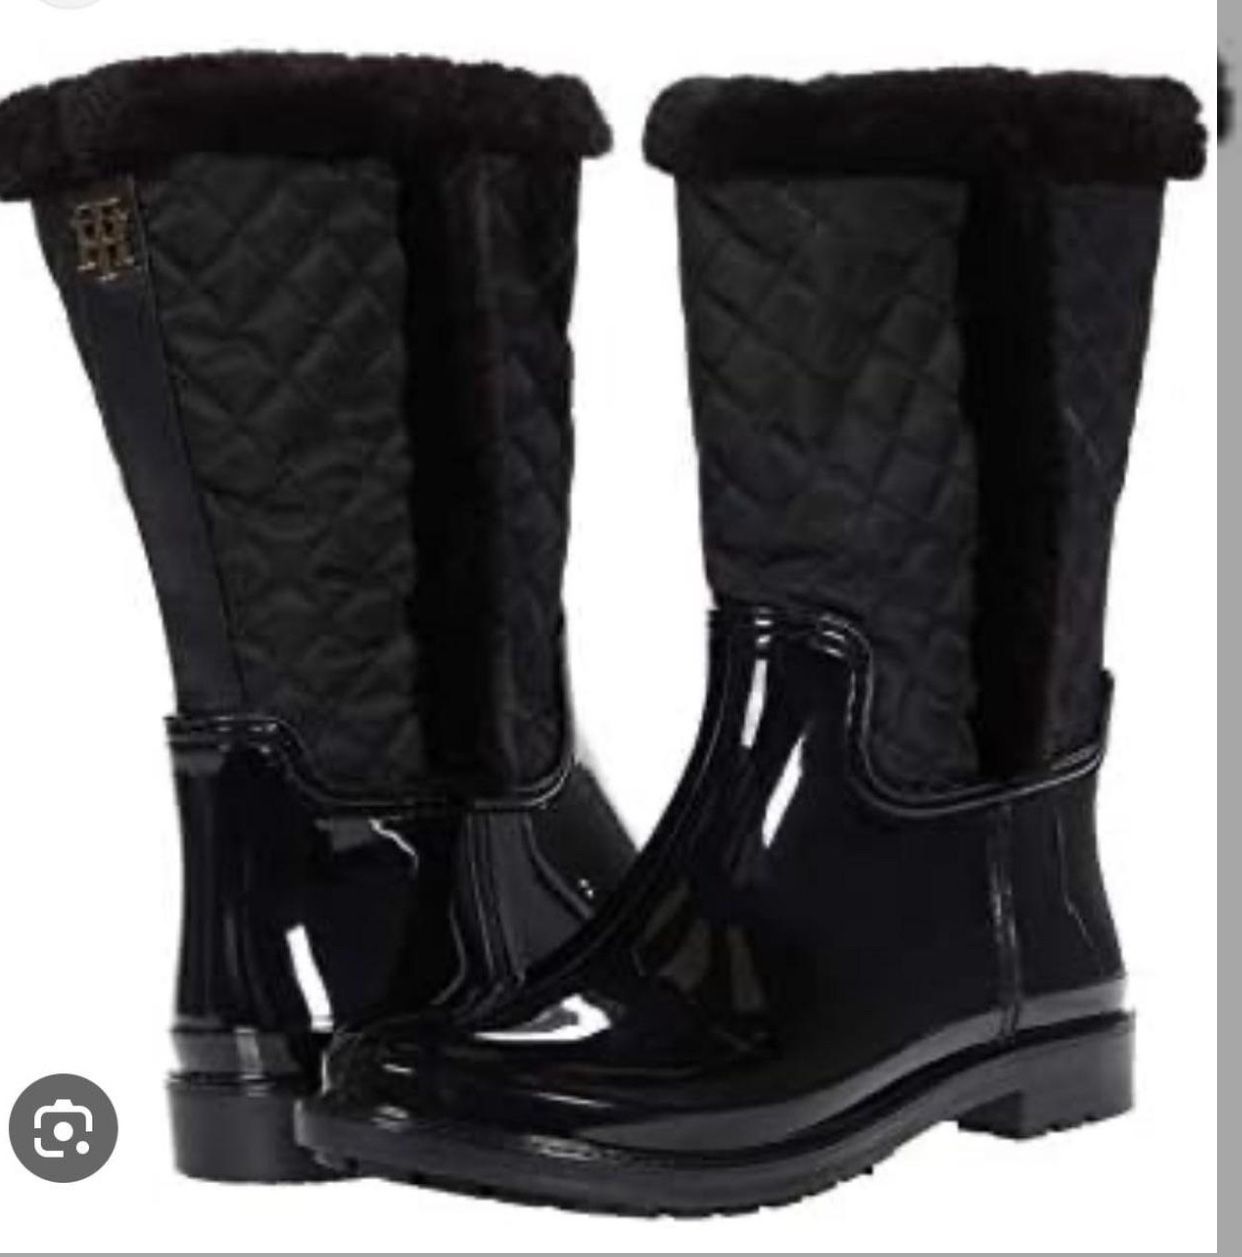 New 🌸 Tommy Hilfiger Women's Rain Boots Size 7.5